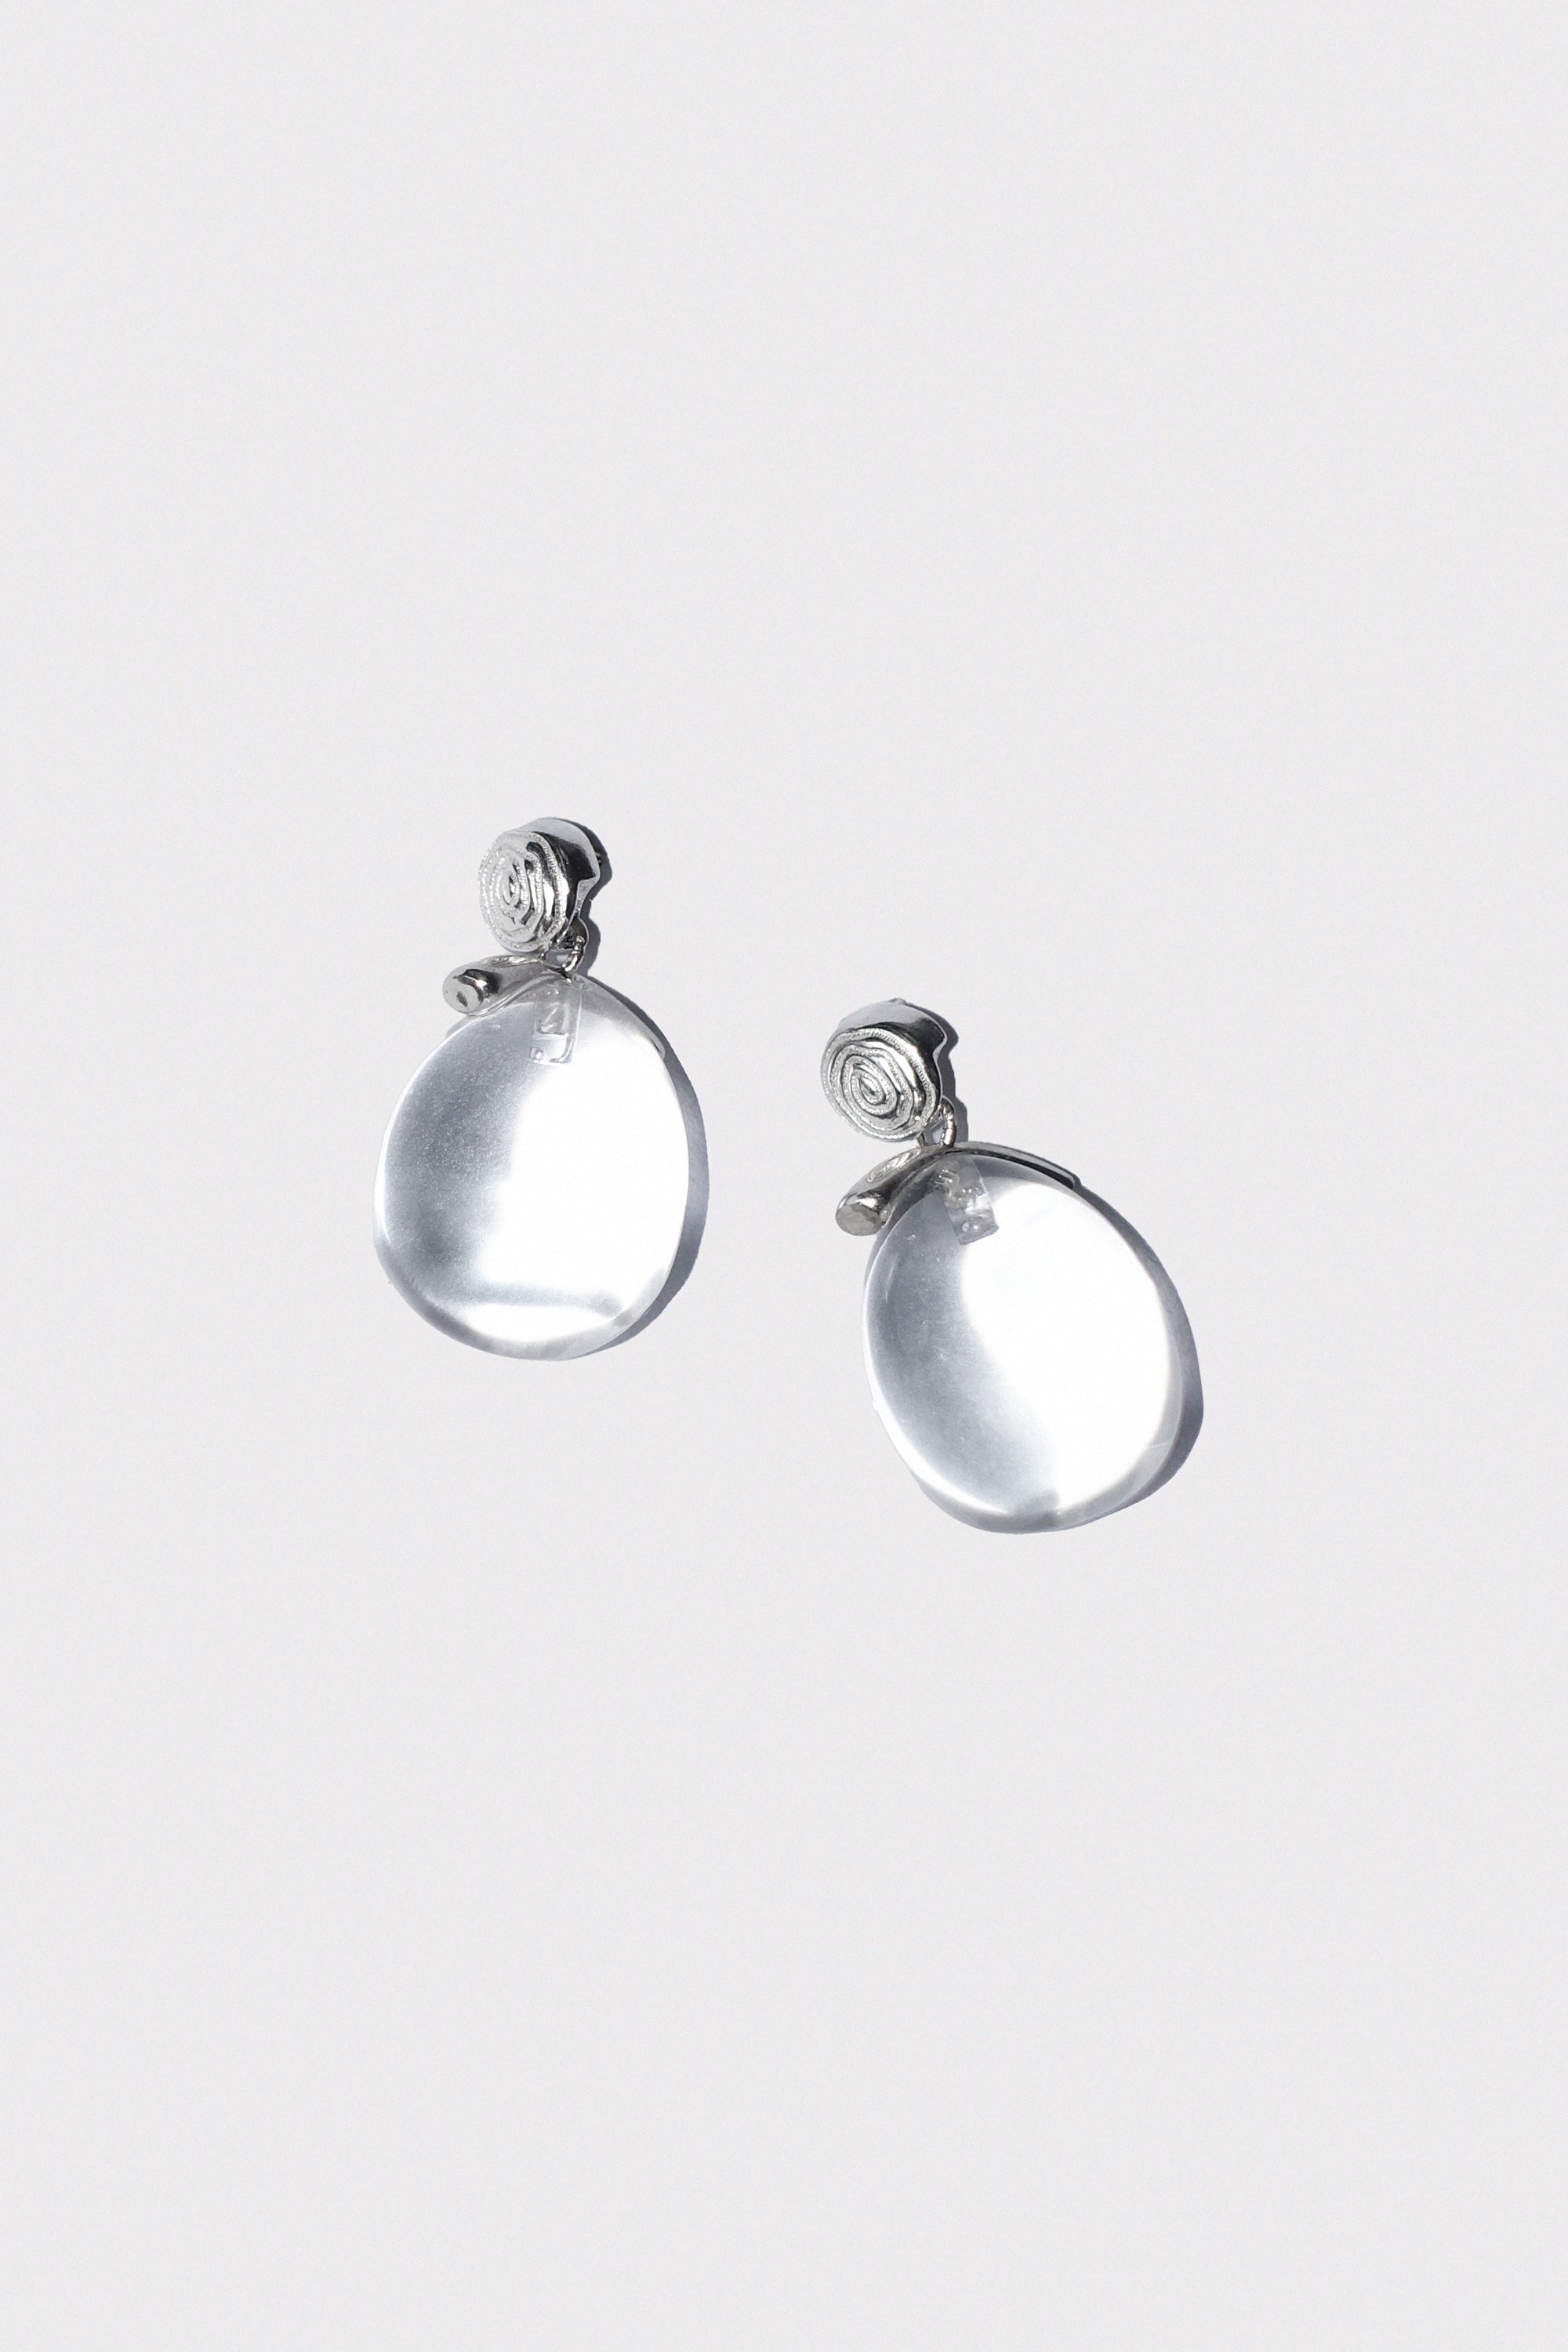 Clear Quartz Earrings in Sterling Silver by Sapir Bachar